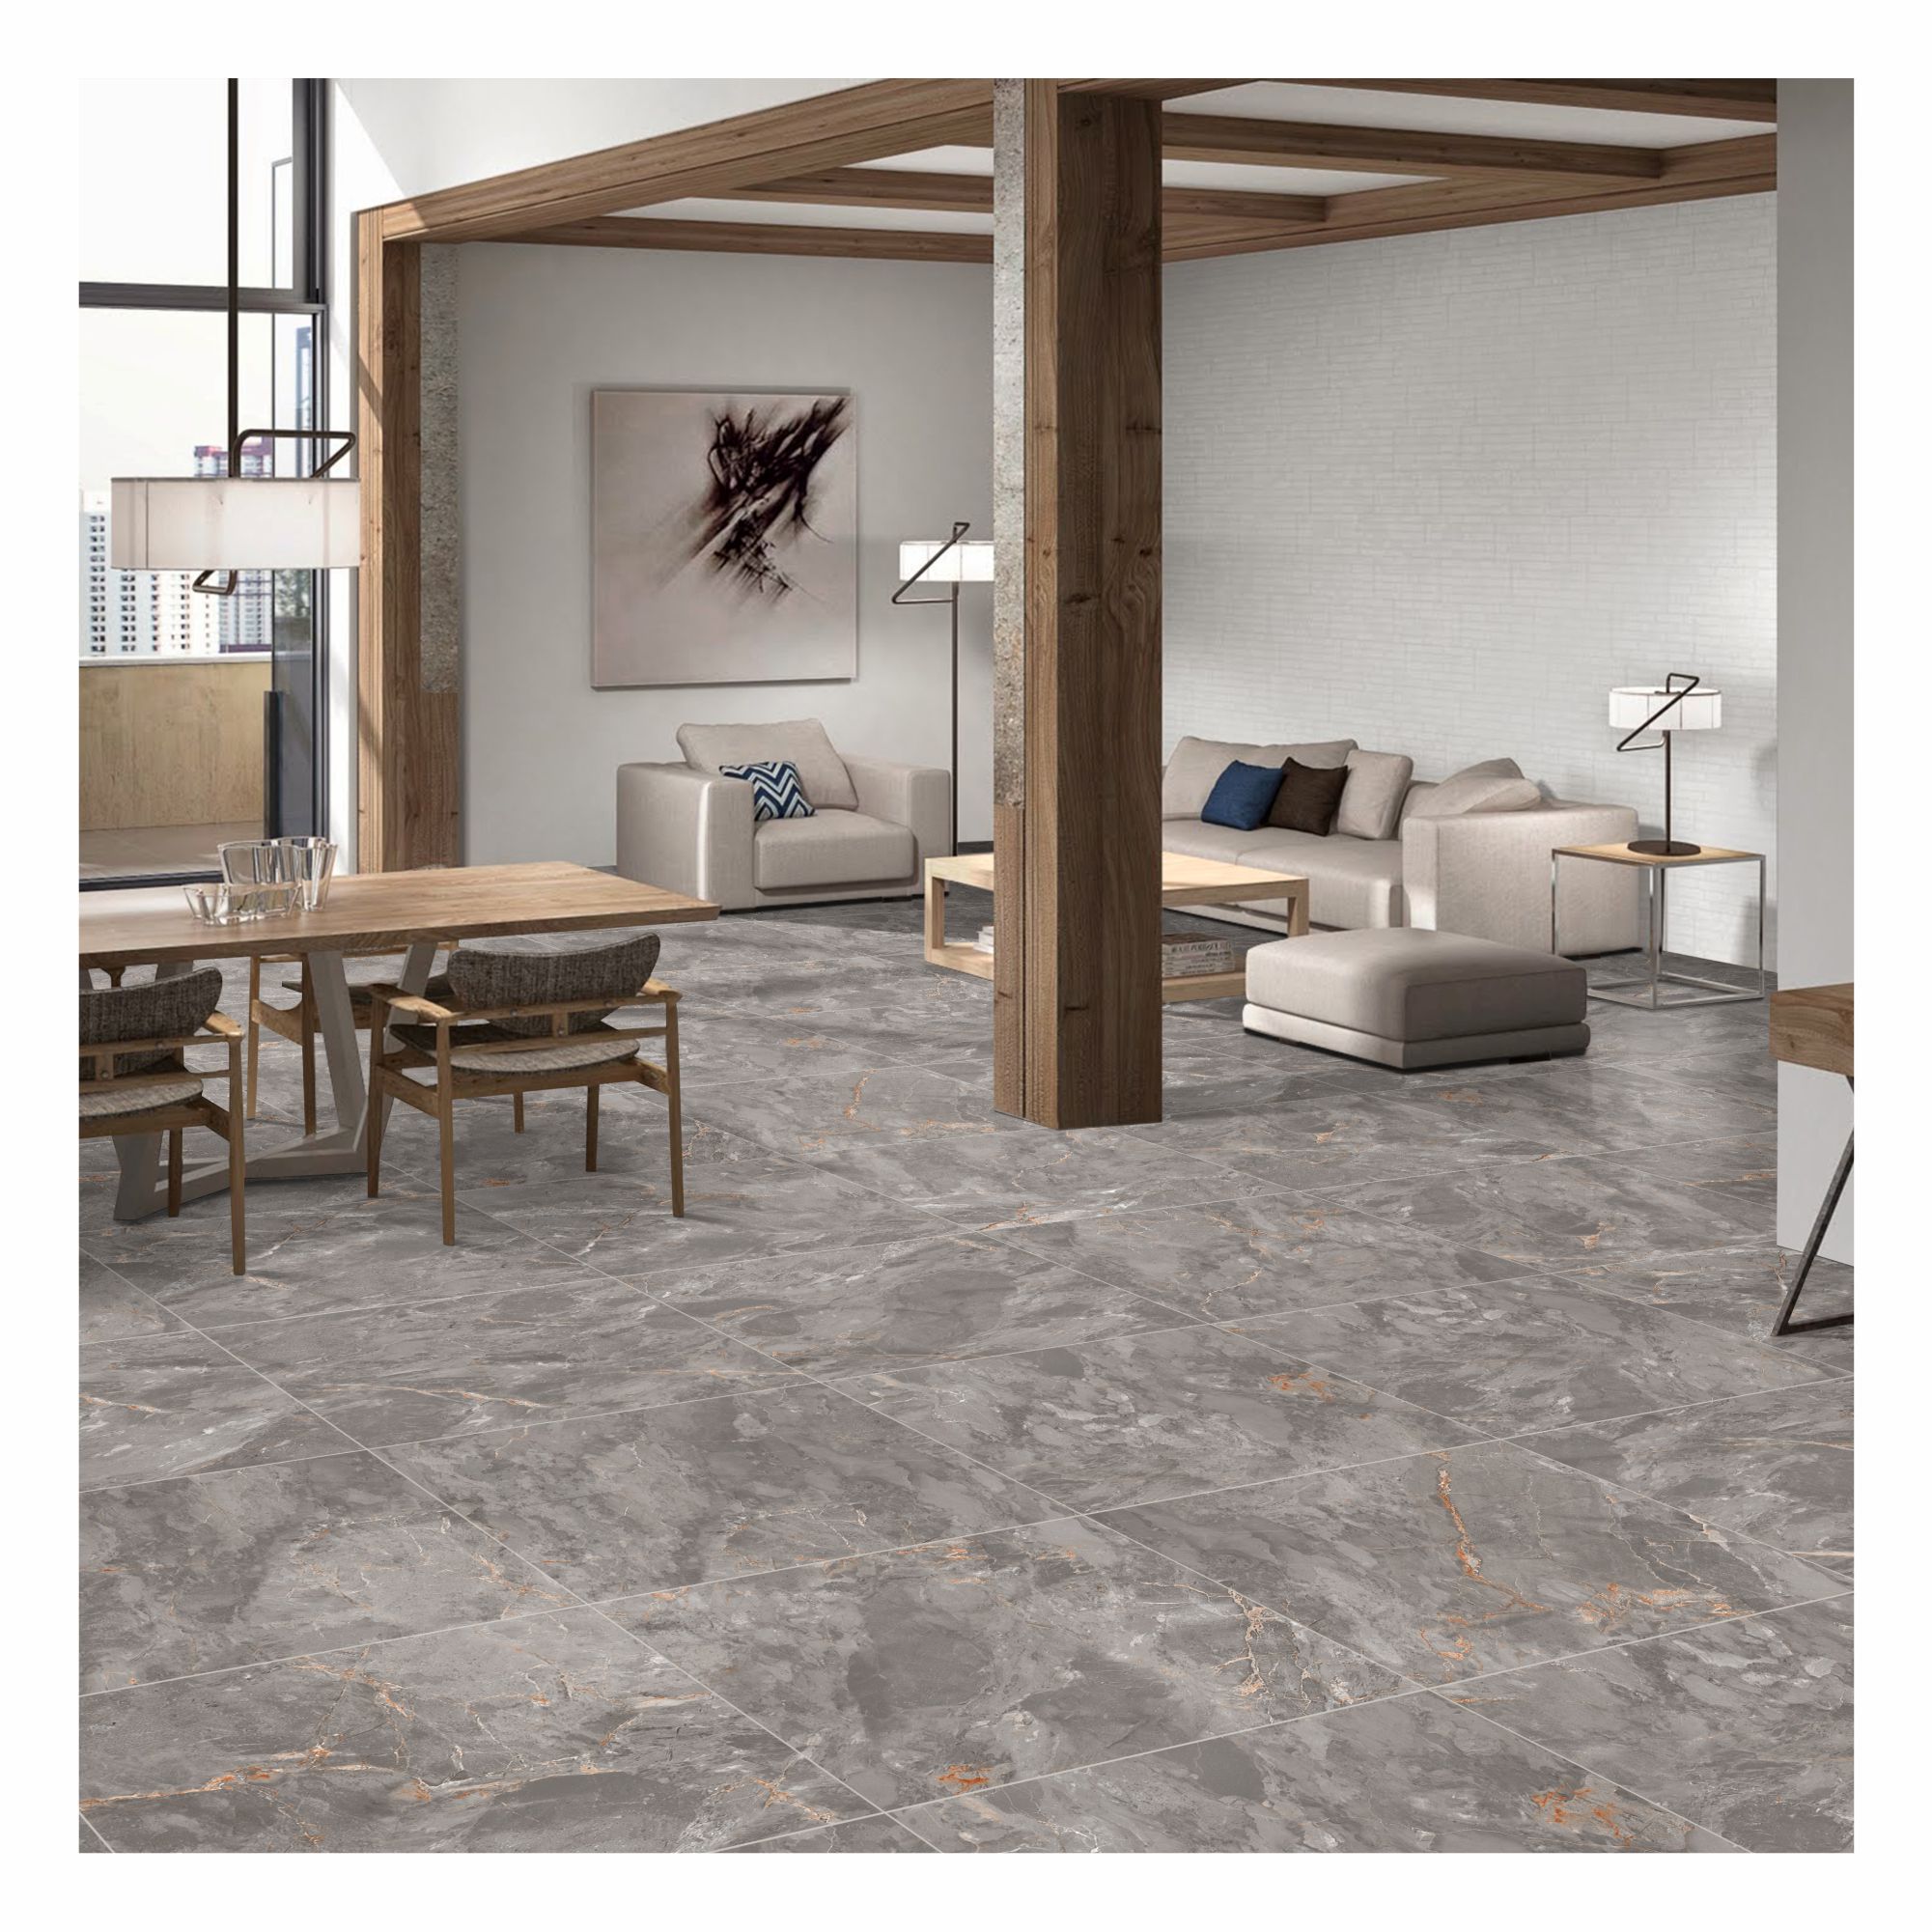 Zerlina Grey Matt Stone effect Porcelain Wall & floor Tile, Pack of 3, (L)600mm (W)600mm